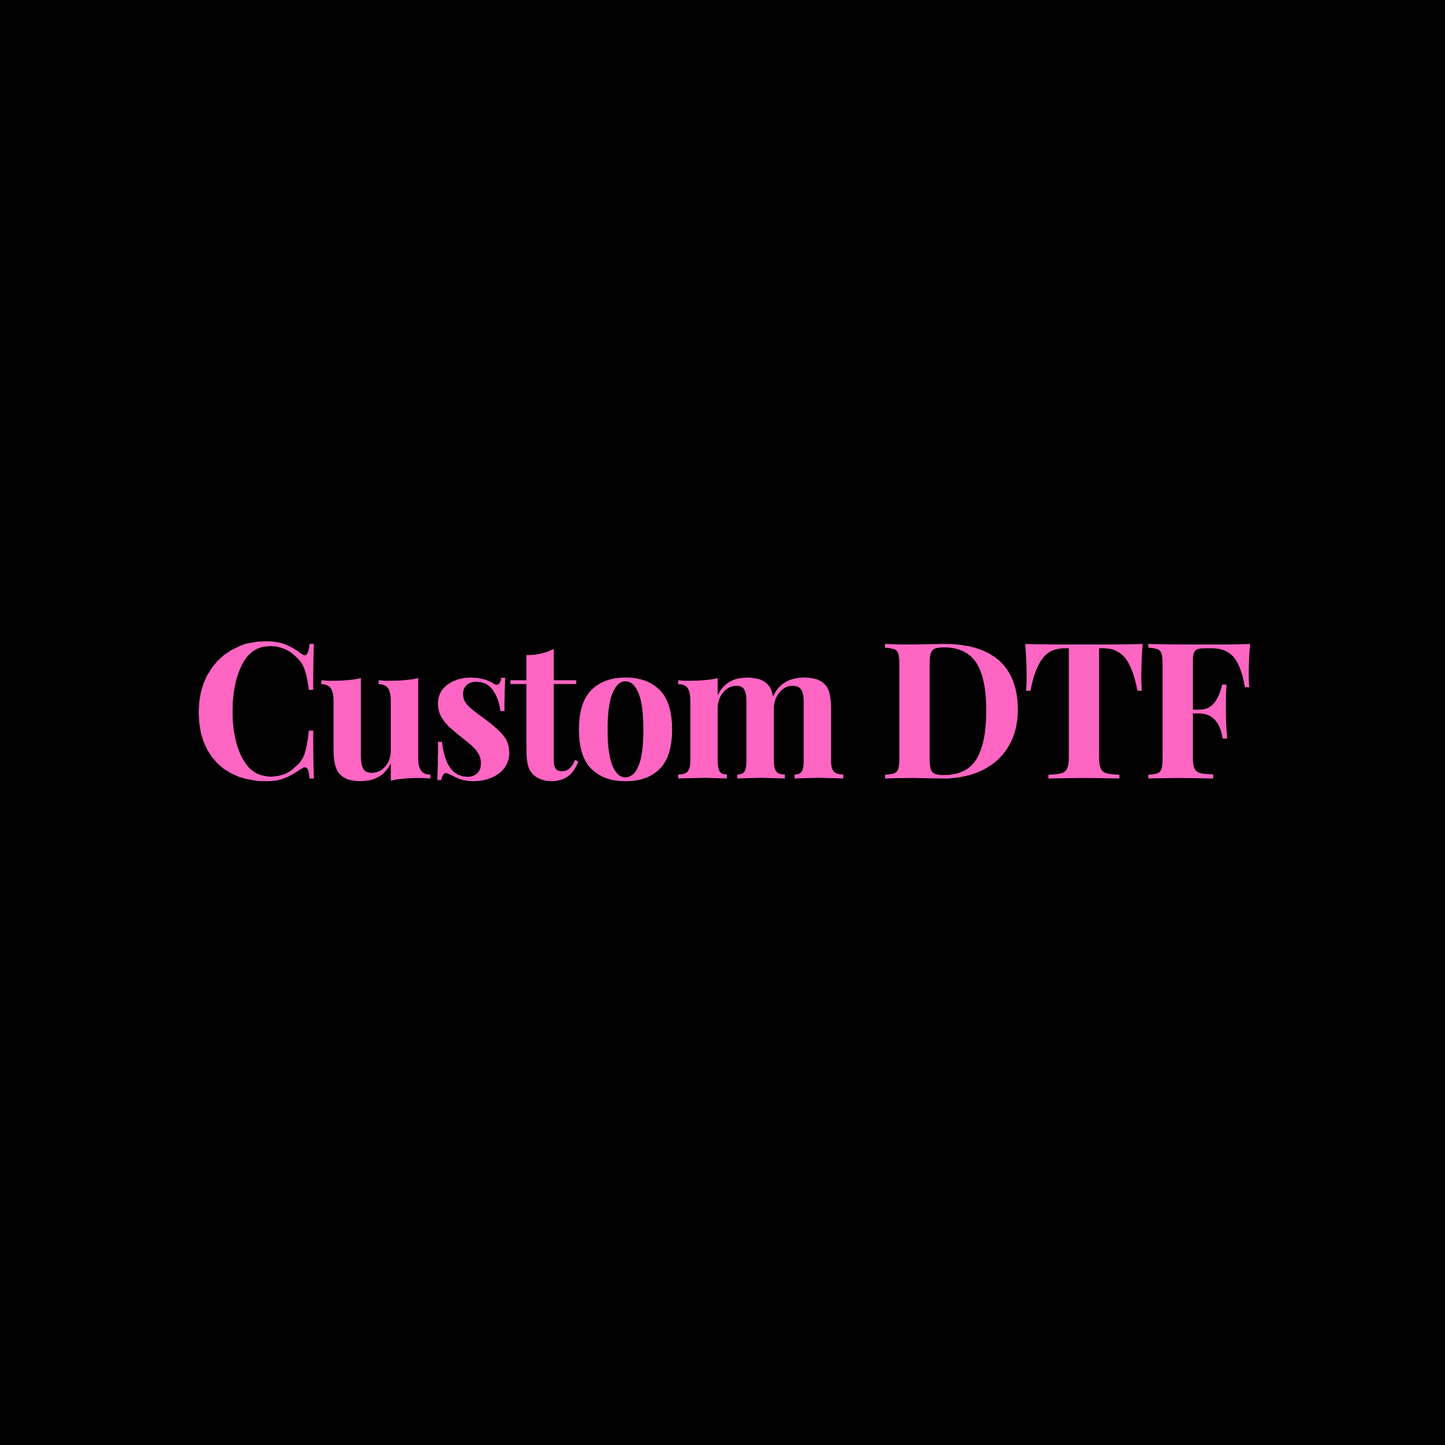 Custom DTF Transfer - 2 to 3 Business Day Turnaround Time